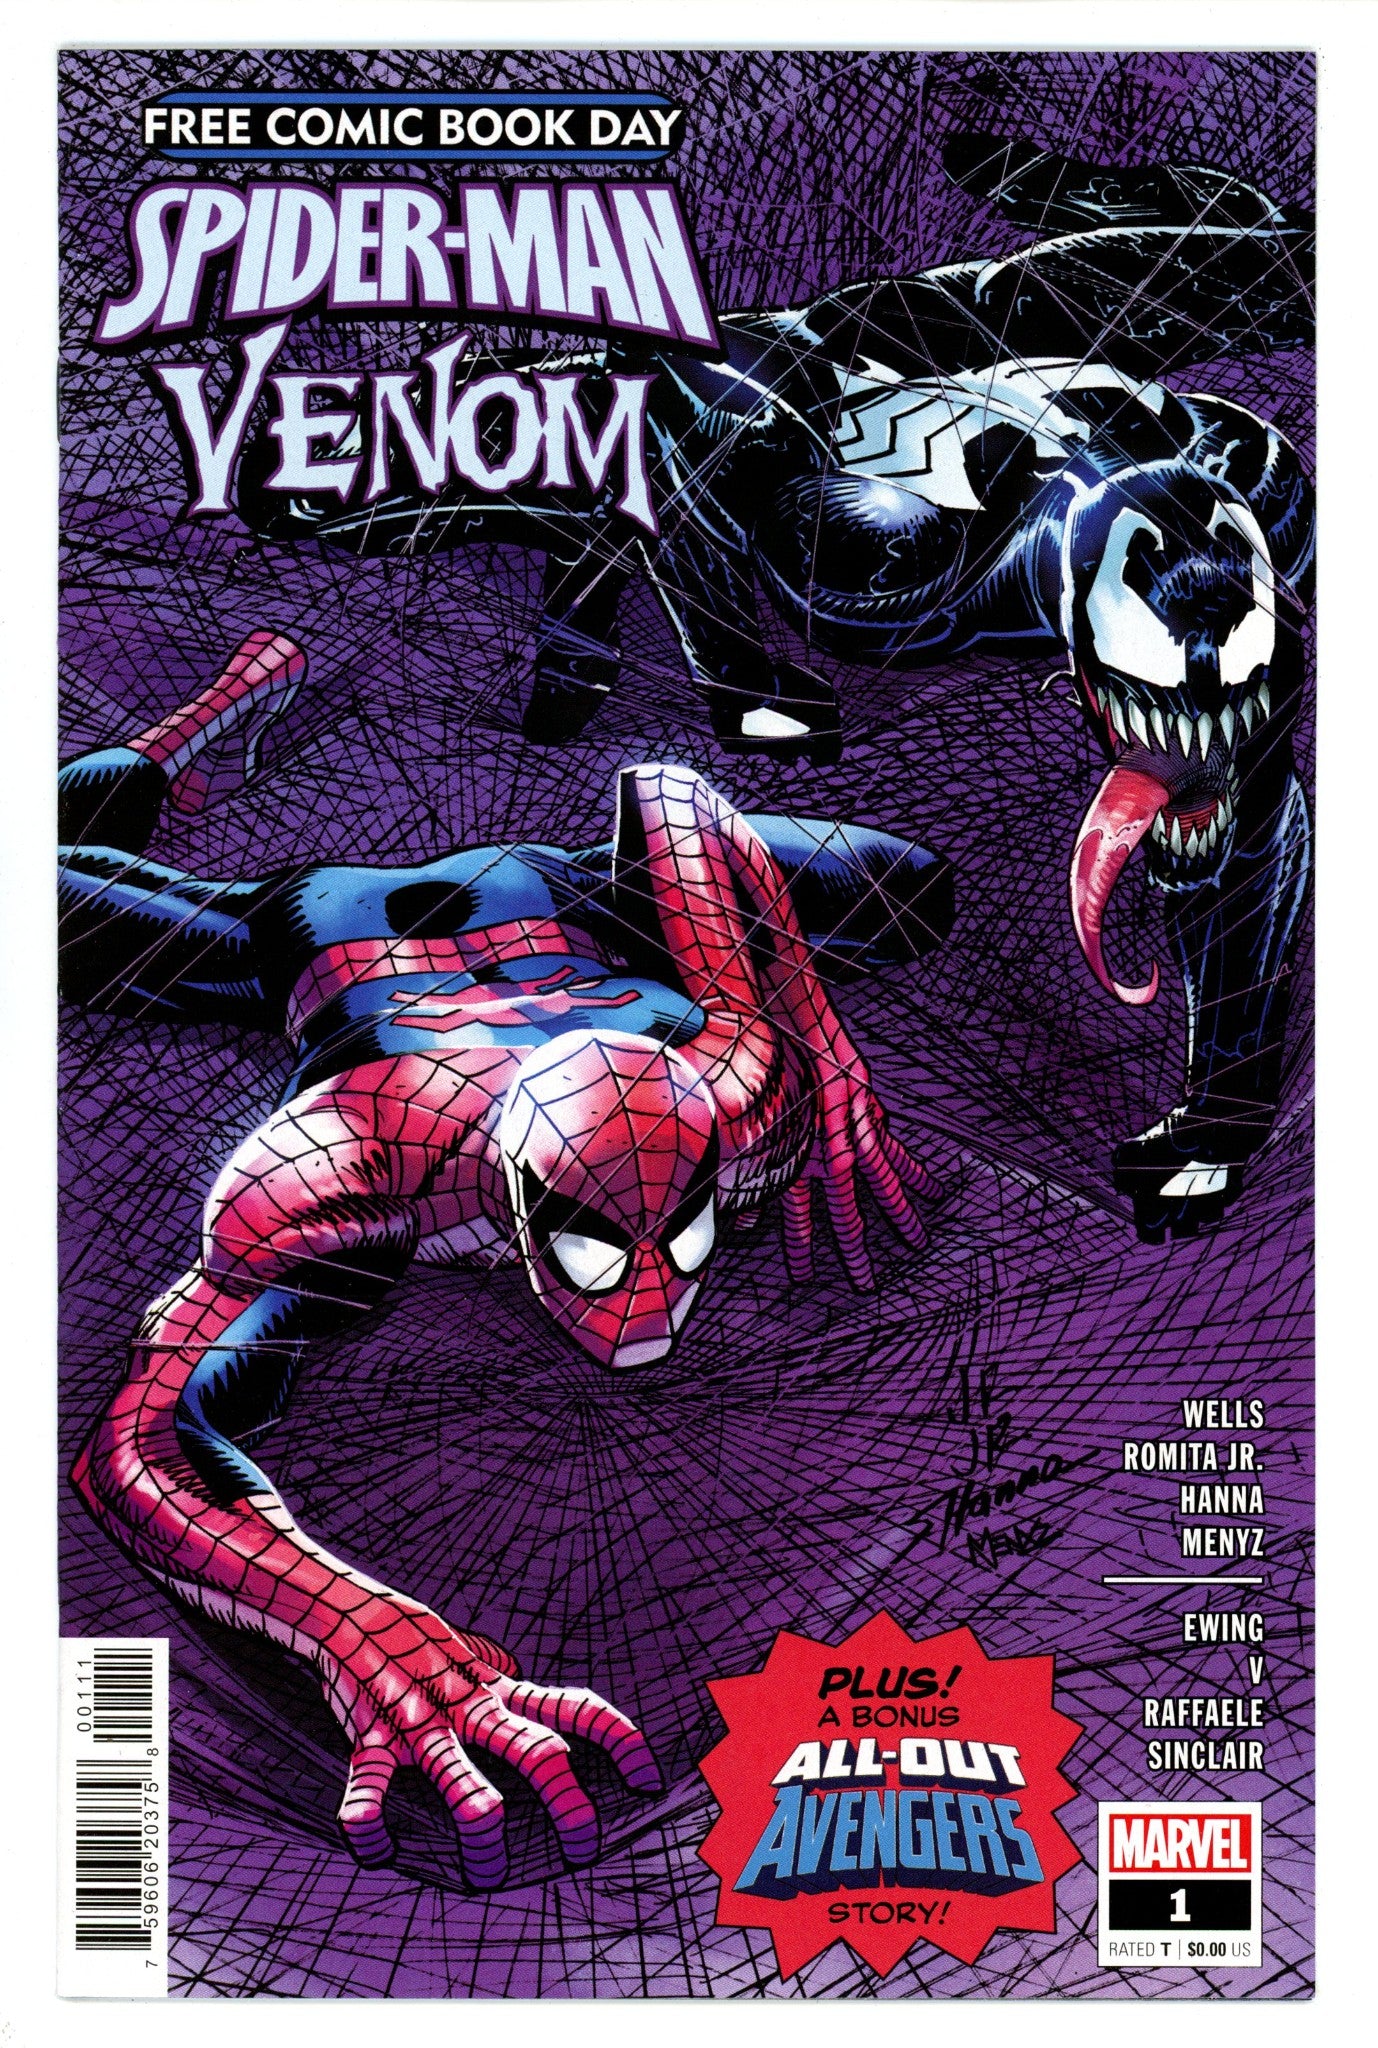 Spider-Man / Venom FCBD 2022